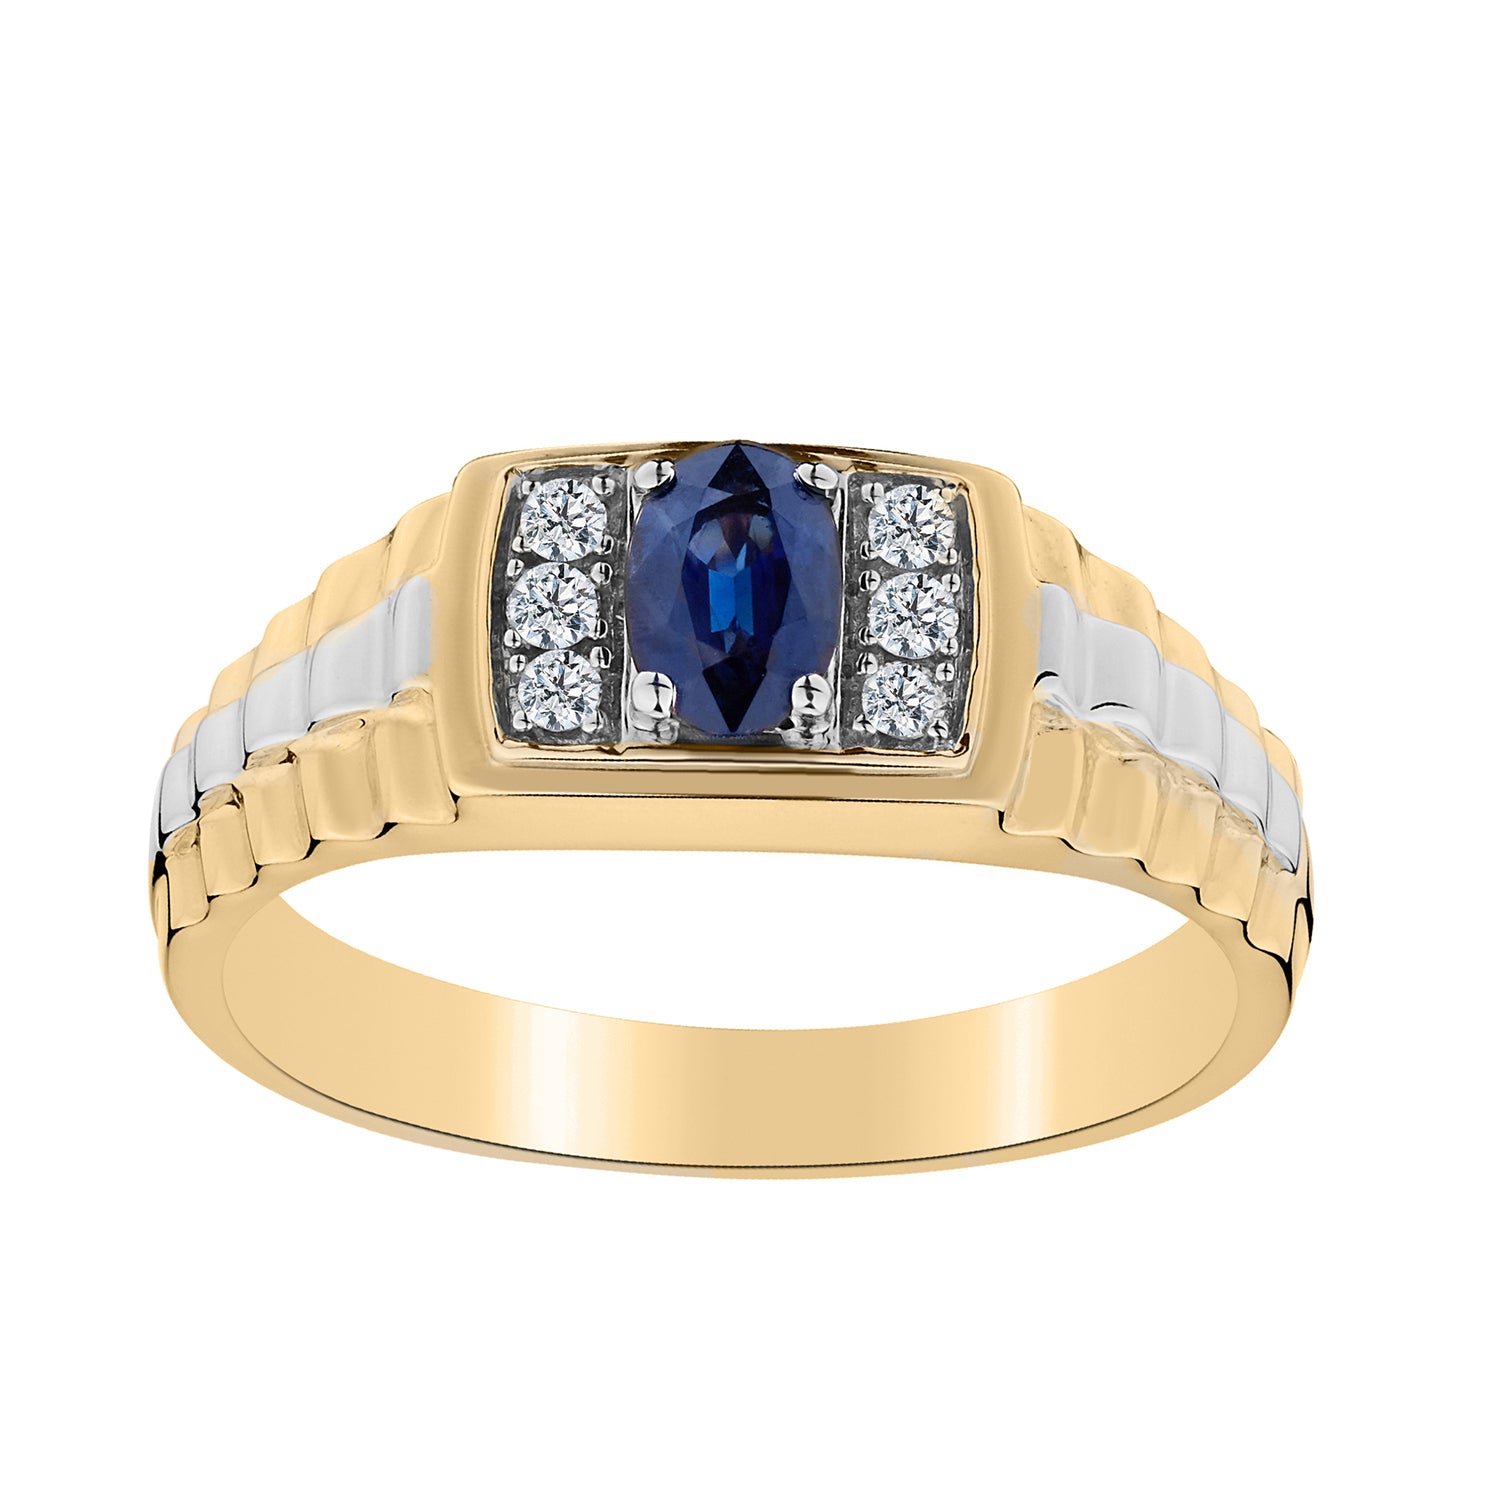 Genuine Sapphire & .12 Carat of Diamond Gentleman's Ring, 10kt Yellow Gold.....................NOW